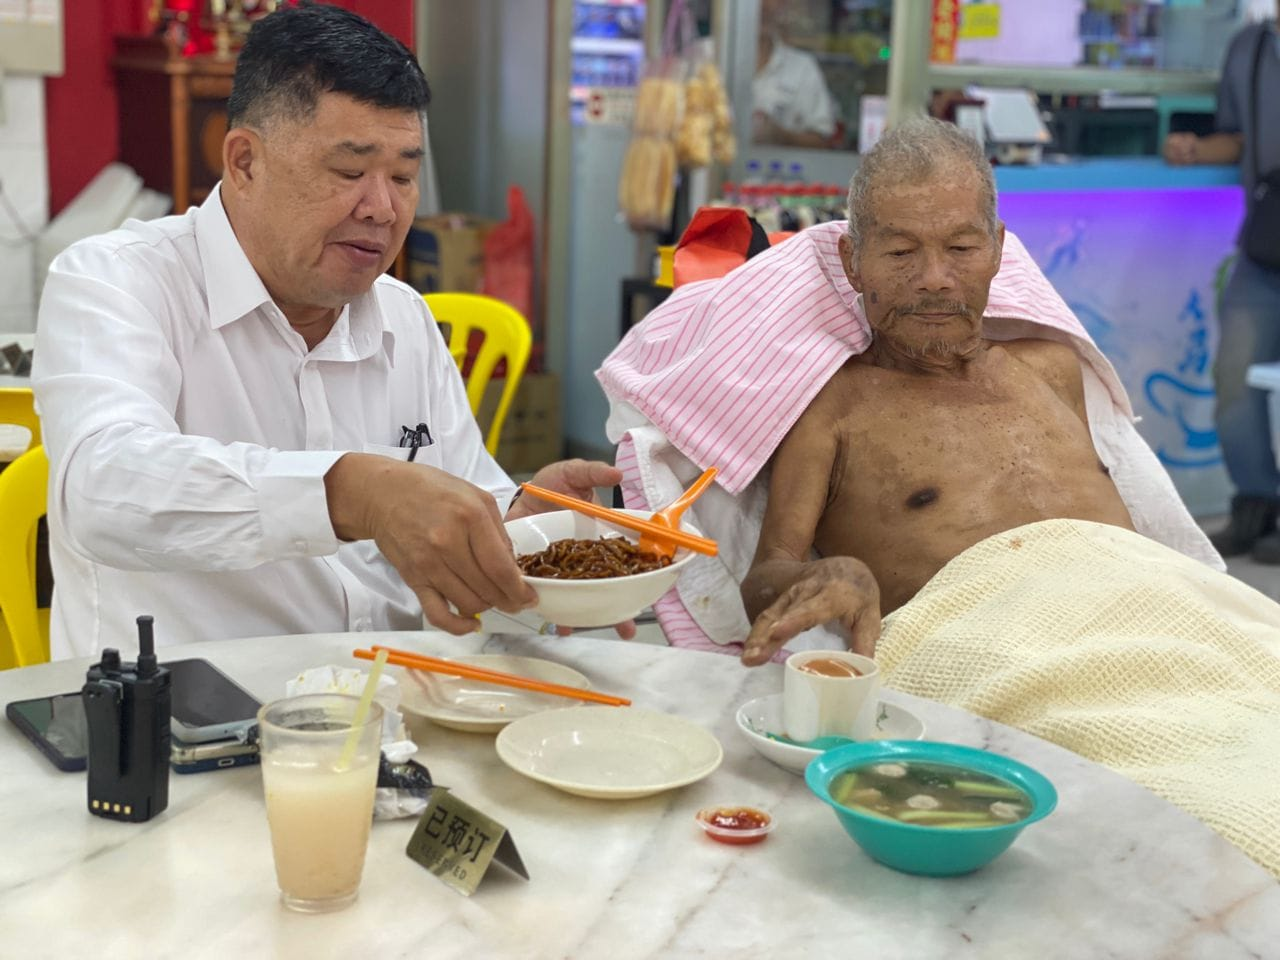 Uncle kentang feeds old man noodles